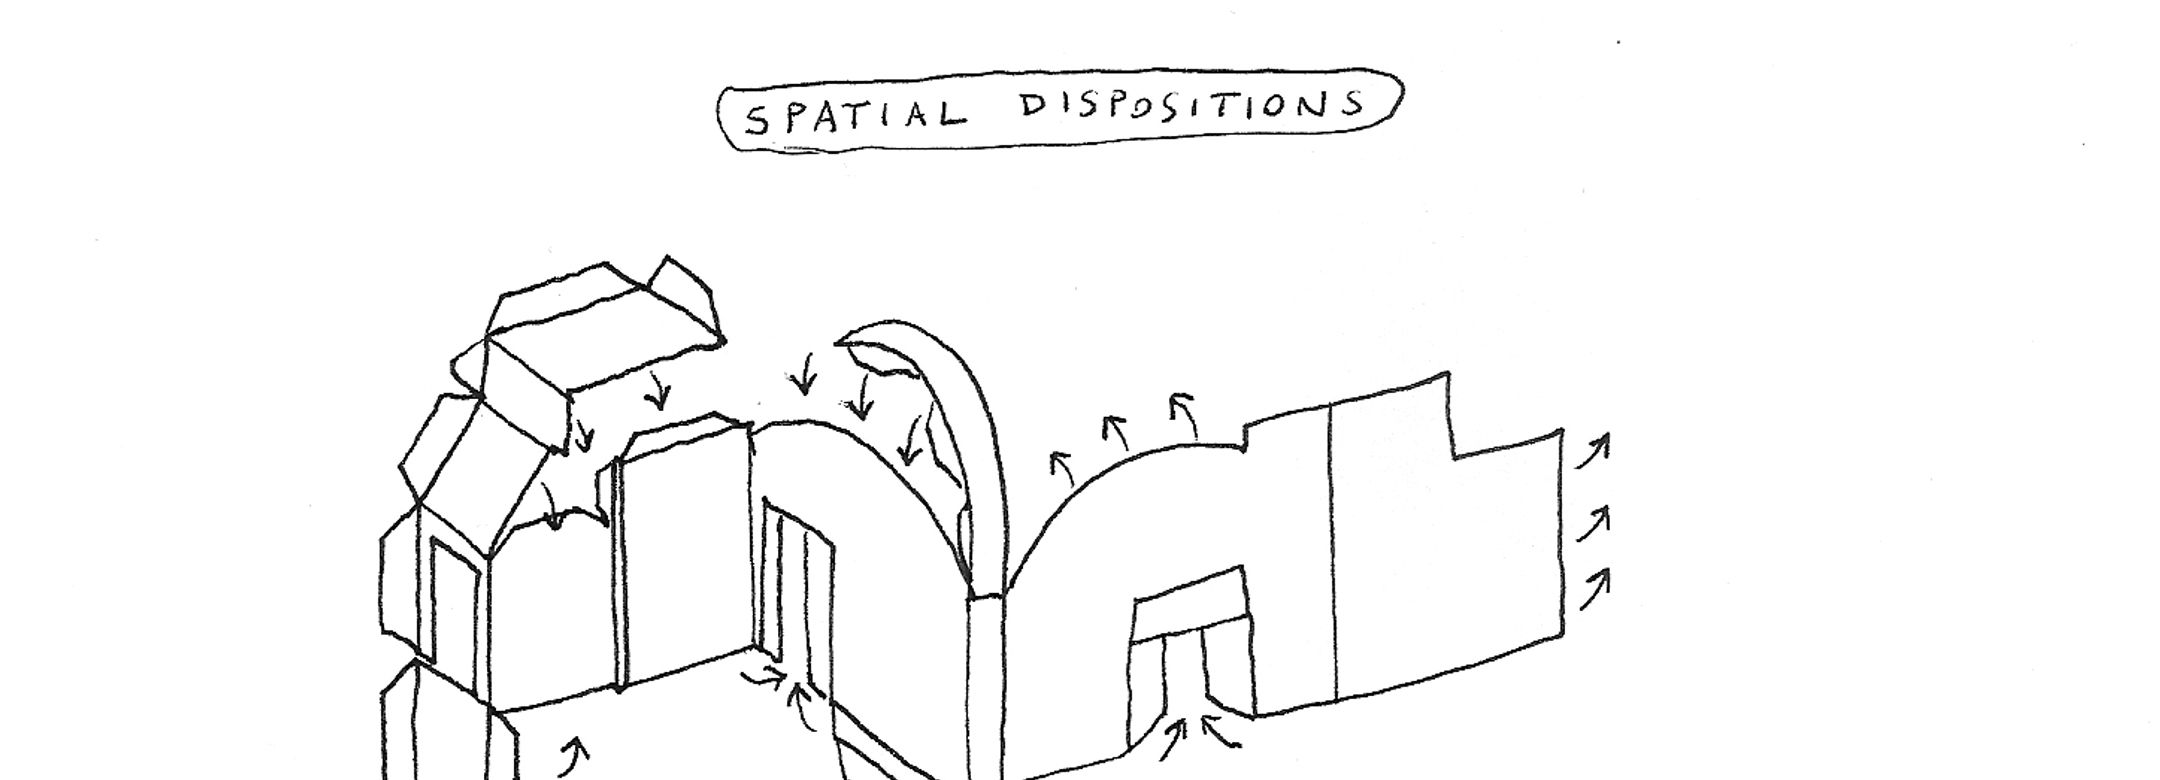 Aldo Giannotti, Spatial Dispositions, 2014